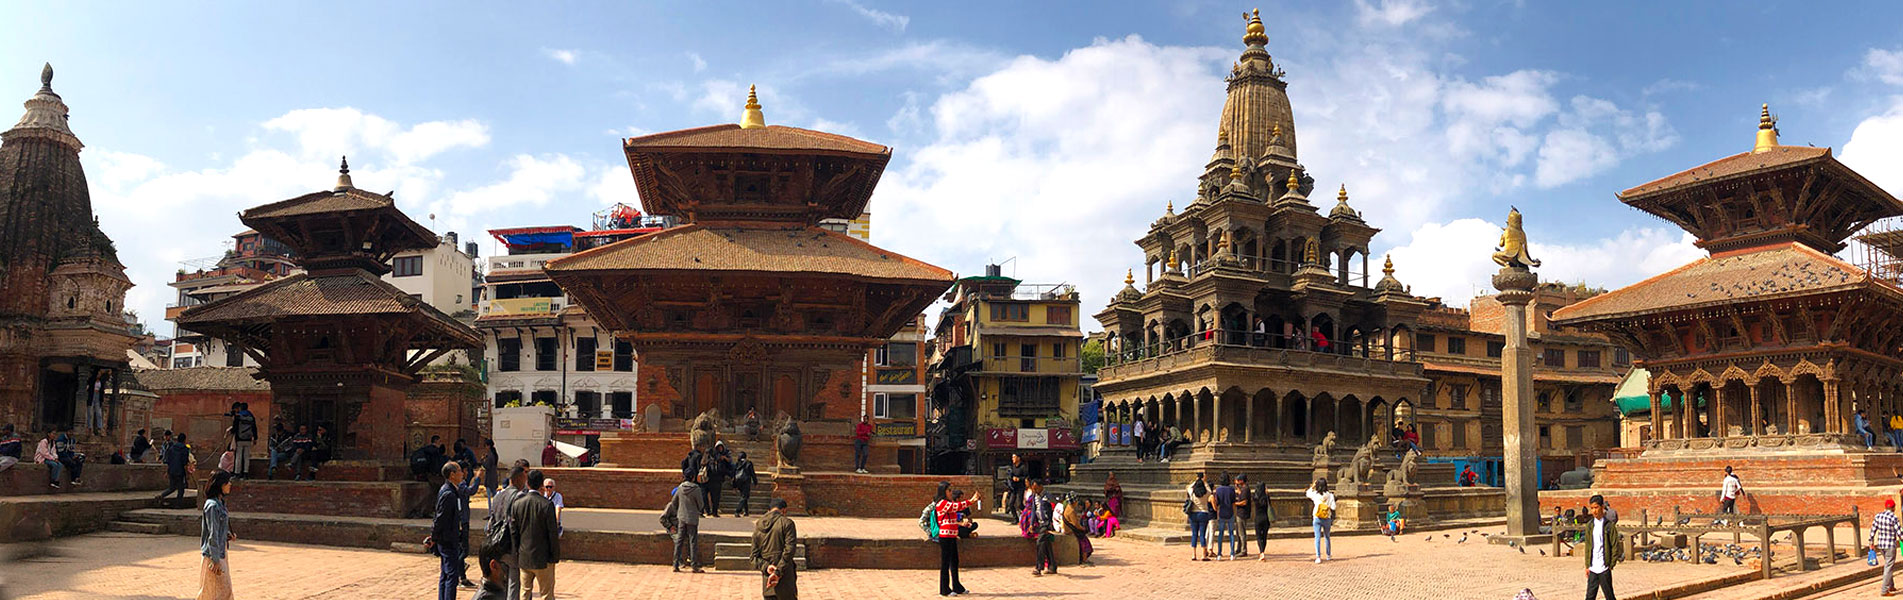 Patan Dubar Square, Nepal